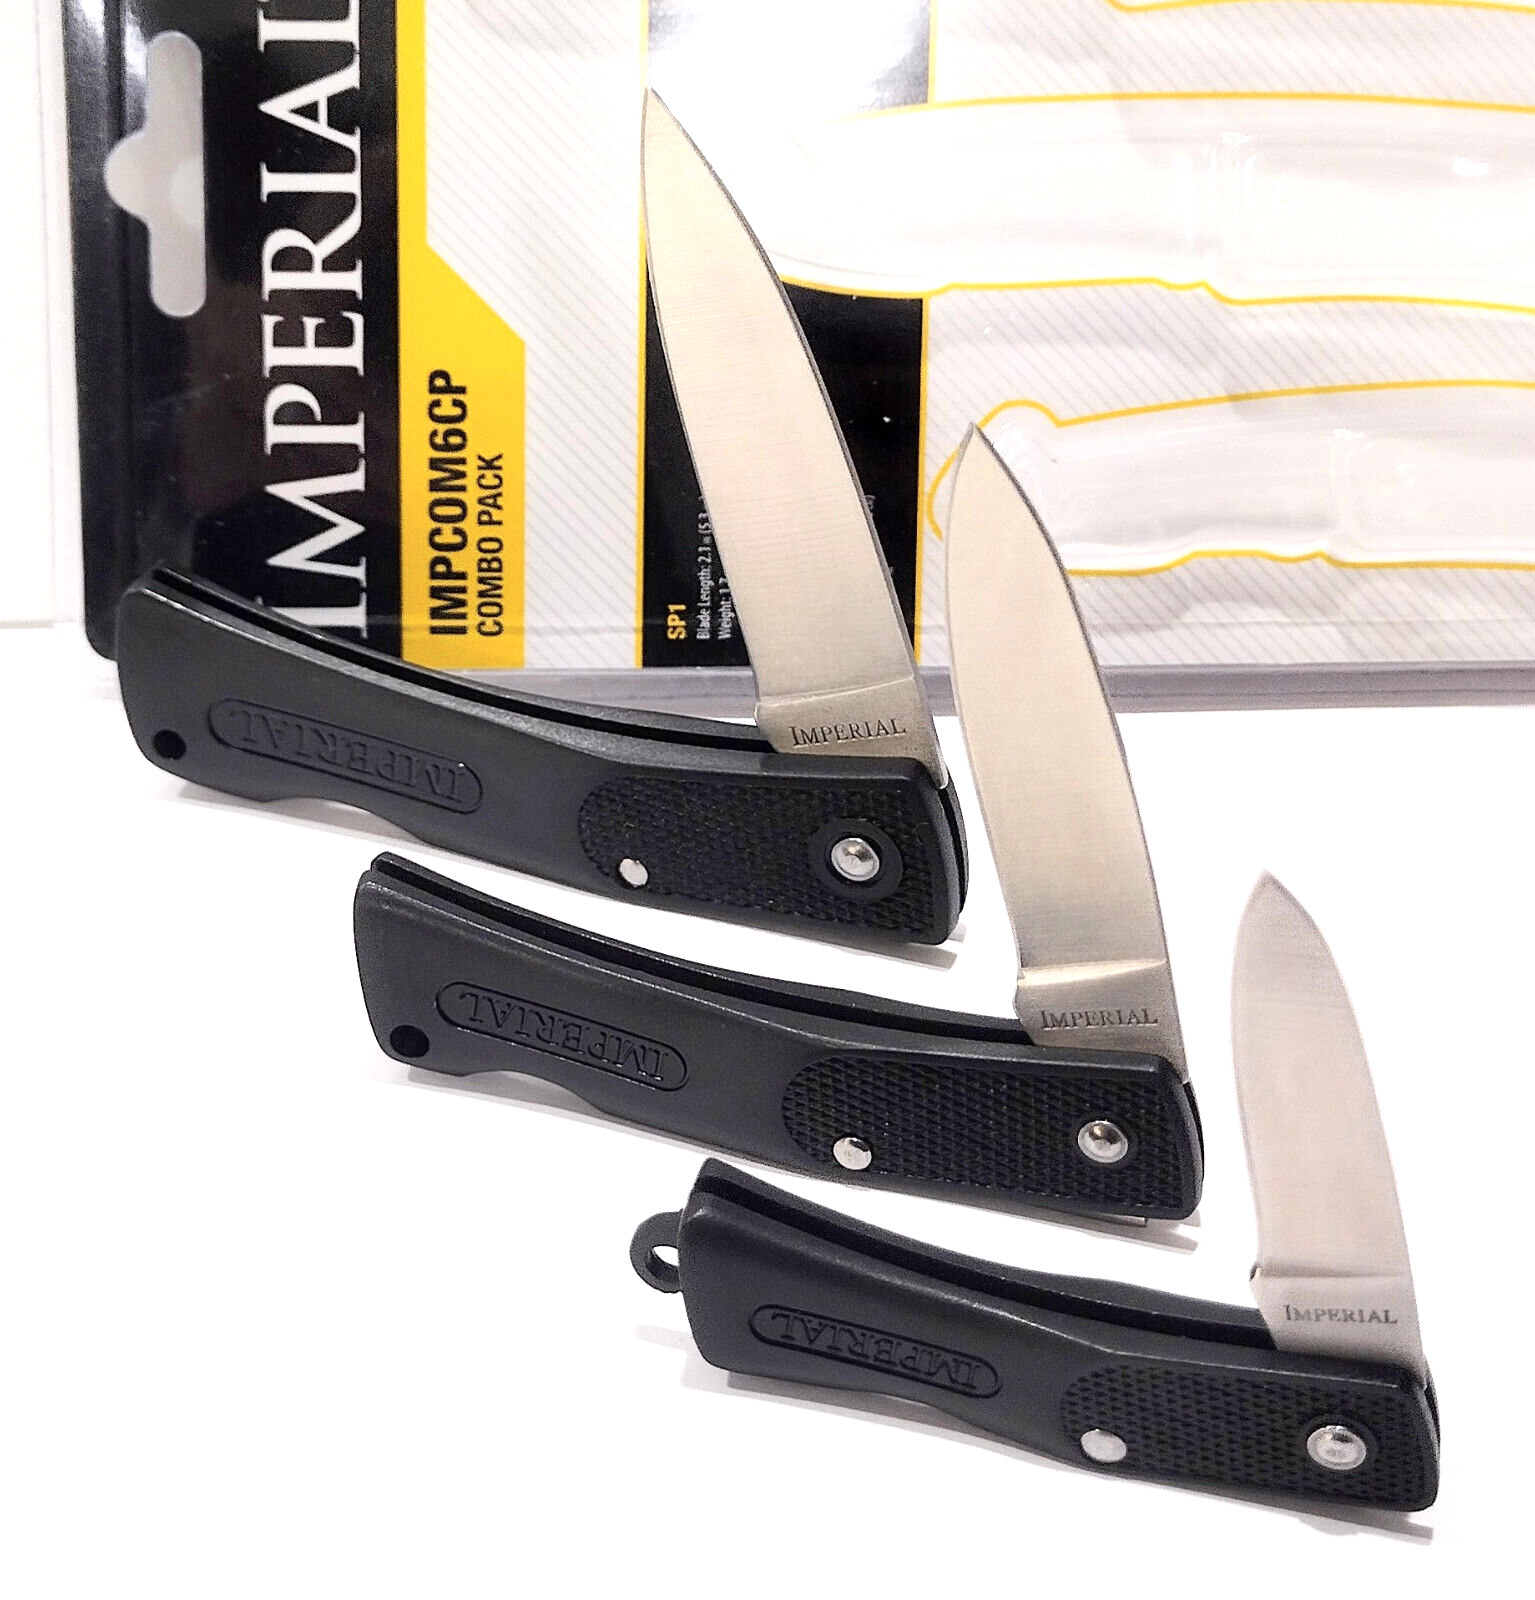 Imperial Schrade Black Lockback Folding Pocket Knife 3 Pc Combo Set - IMPCOM6CP